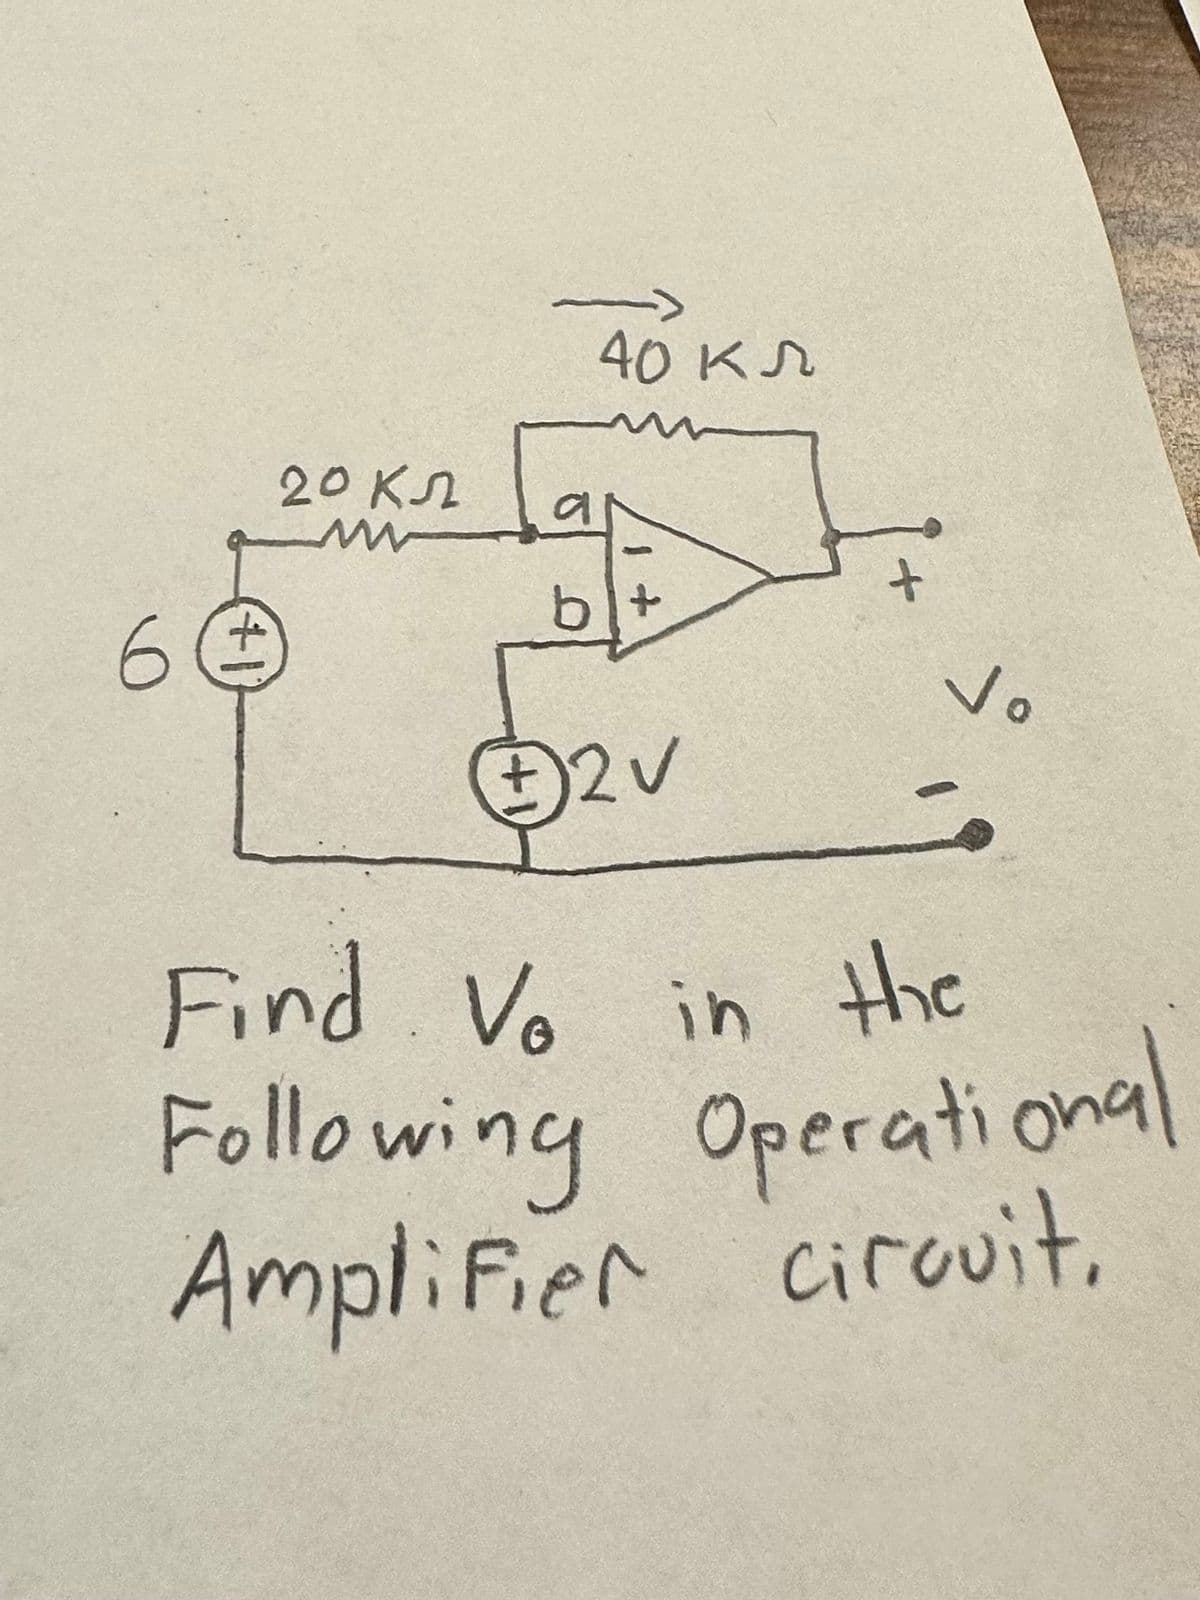 6 €
20 кл
m
40 кл
кл
bit
12V
Vo
Find Vo in the
Following Operational
Amplifier circuit.